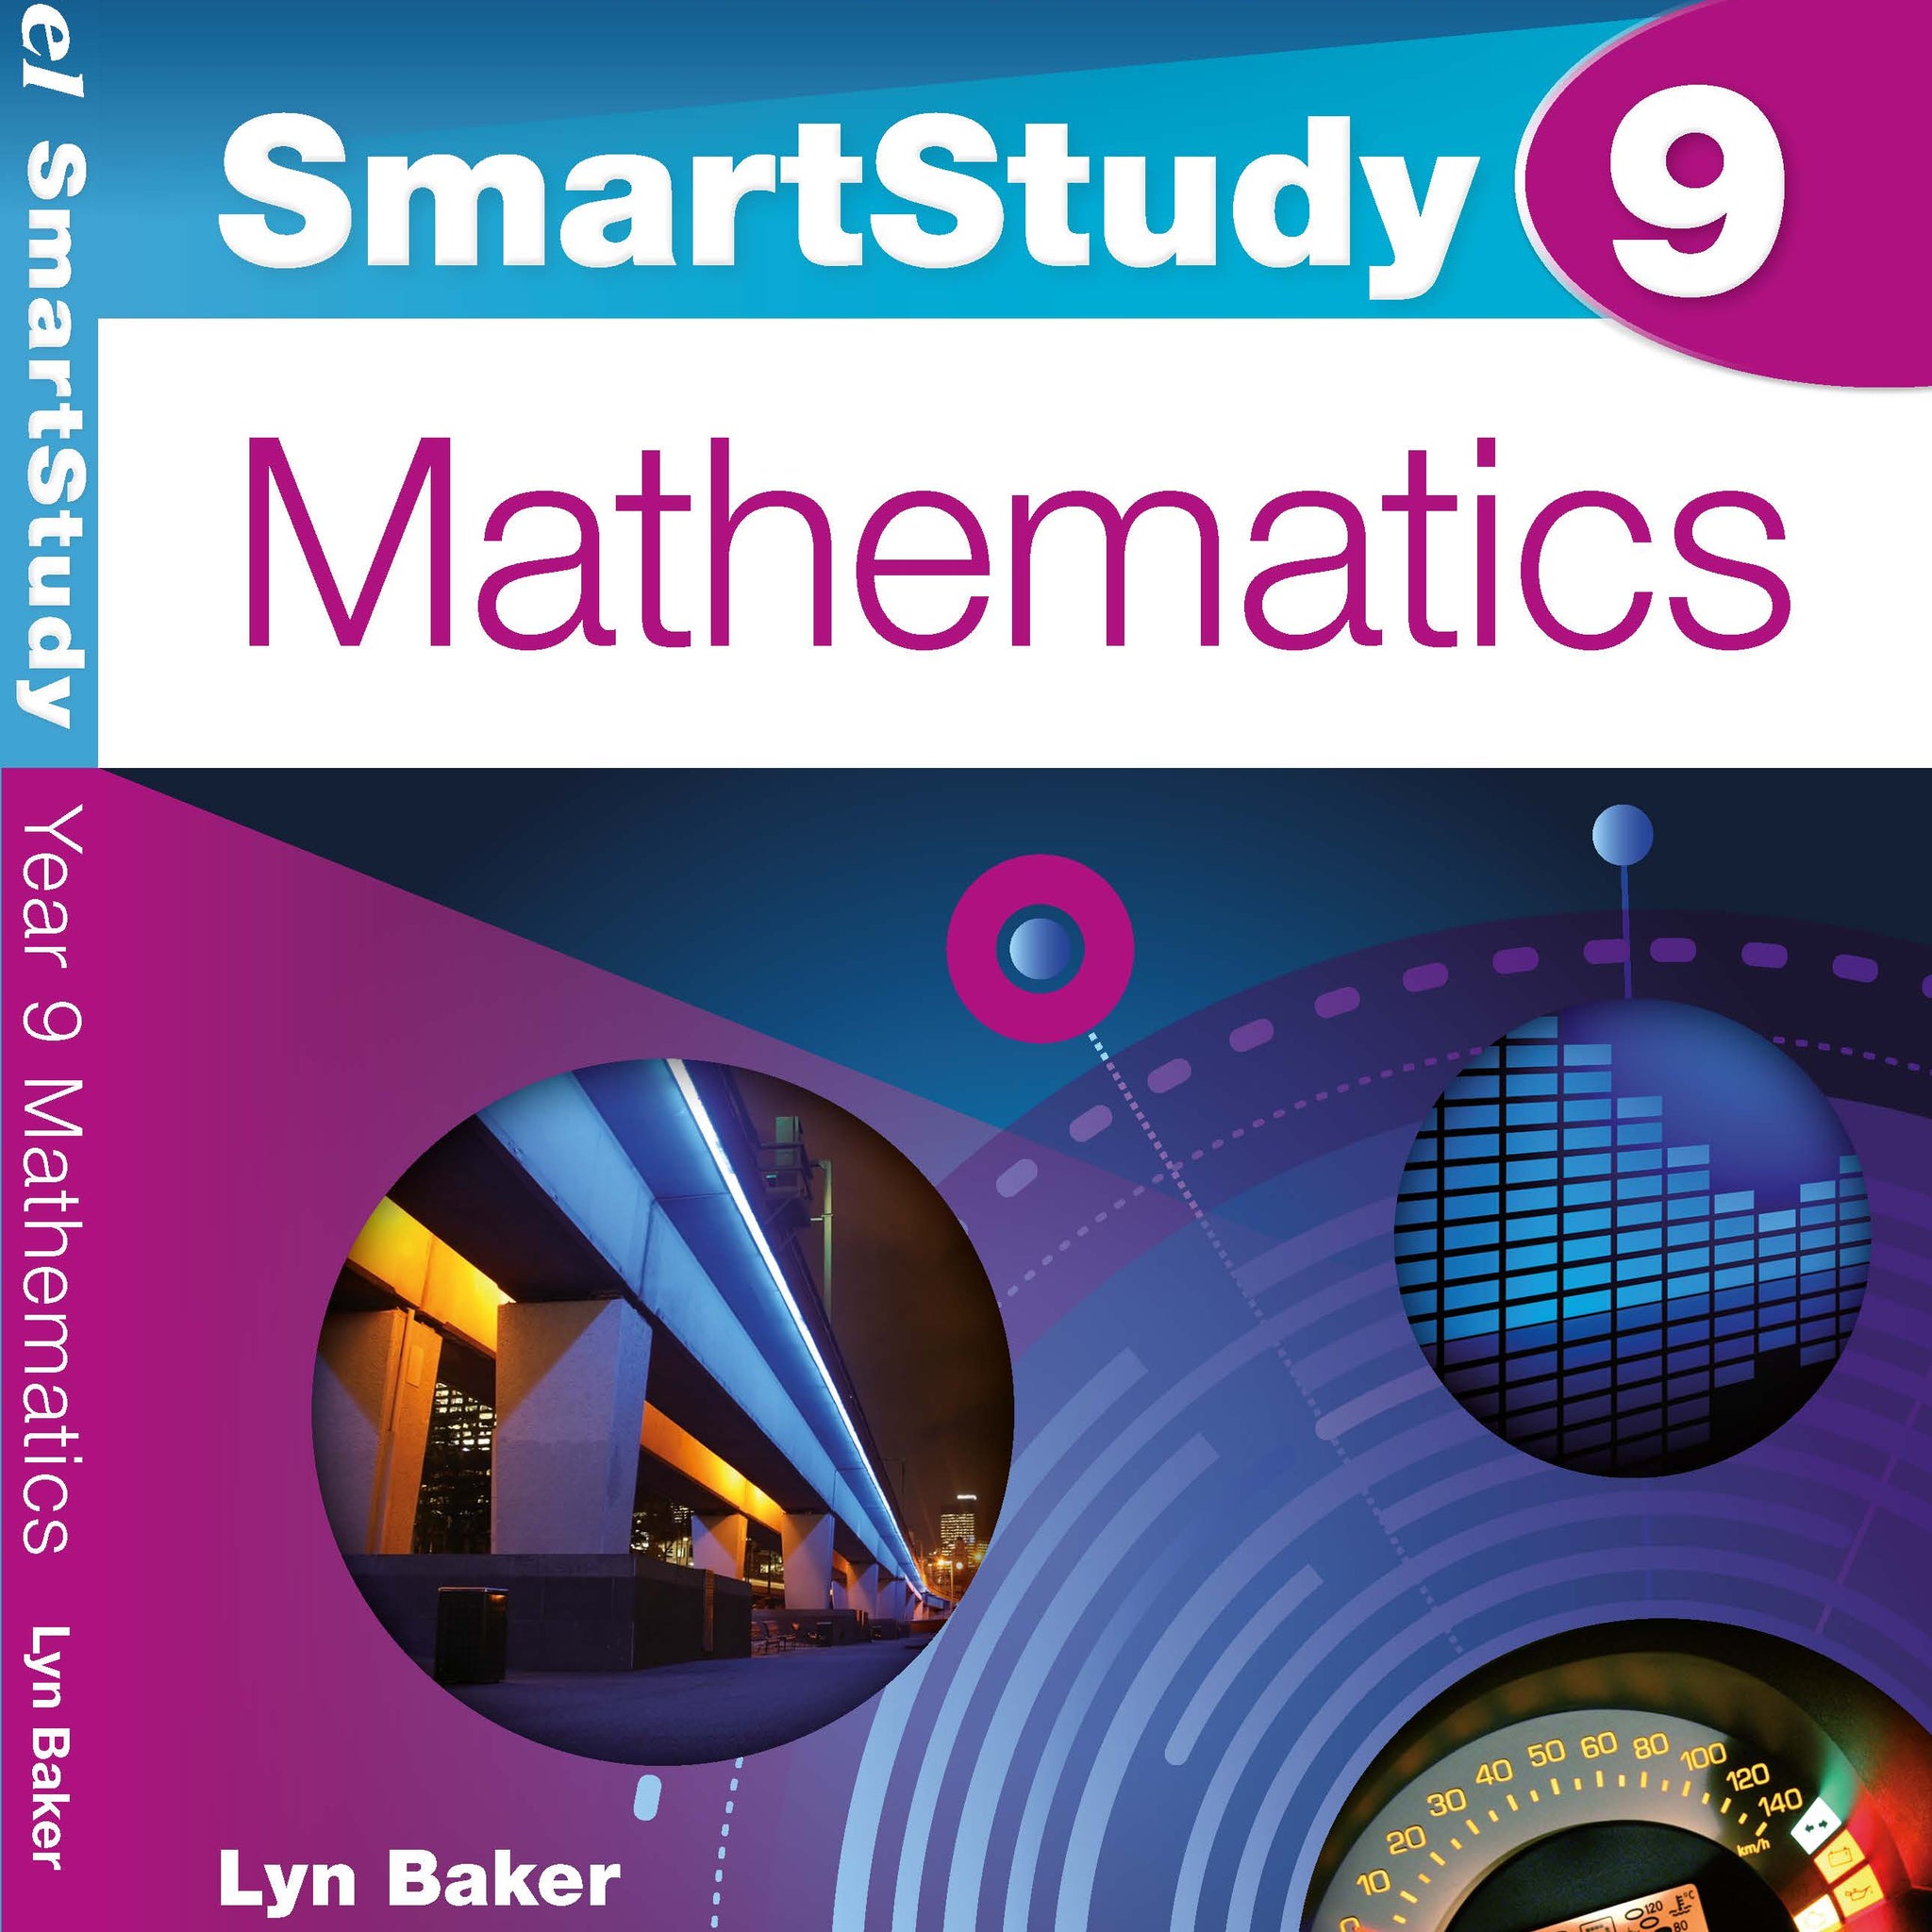 Excel SmartStudy Year 9 Mathematics